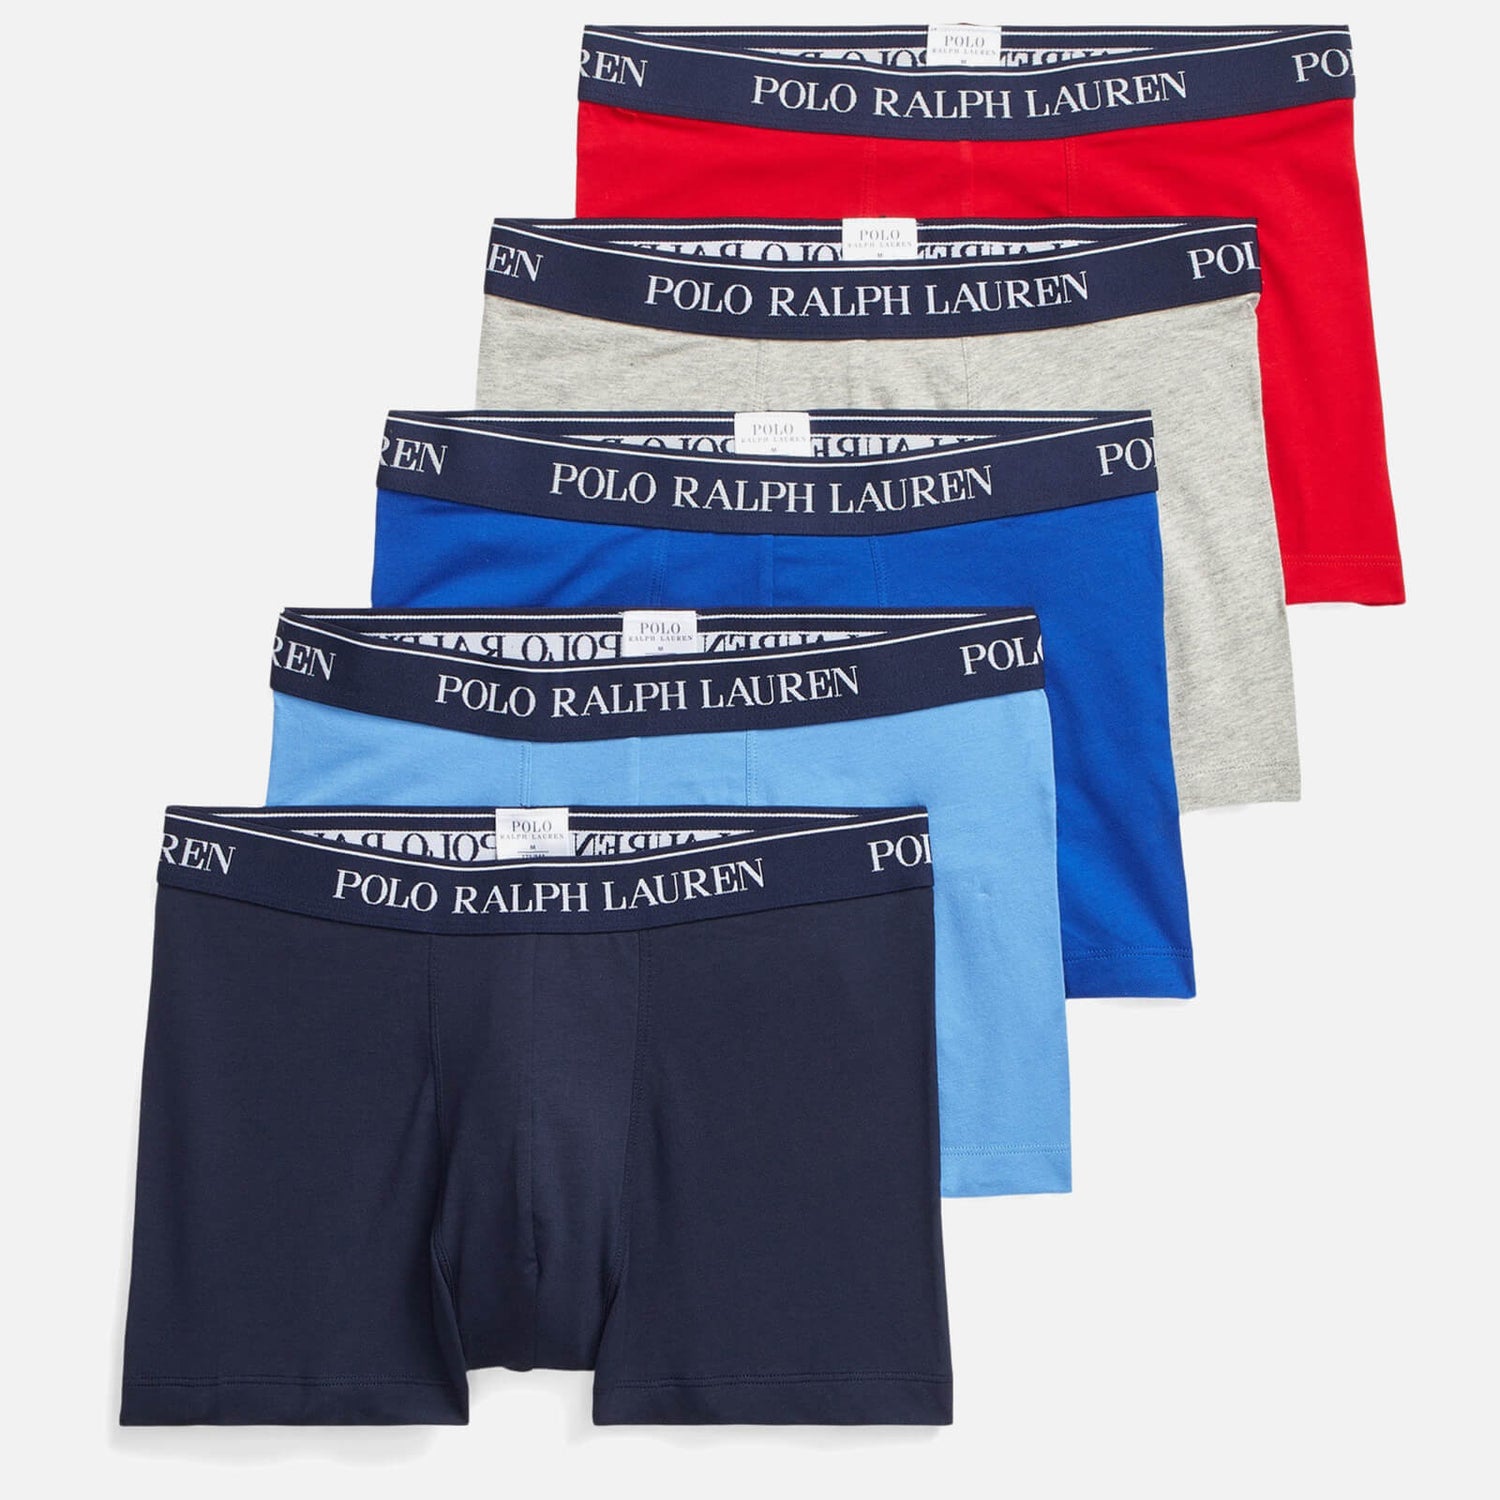 Polo Ralph Lauren Men's 5-Pack Trunk Boxer Shorts - Red/Grey/Royal/Blue/Navy - XL